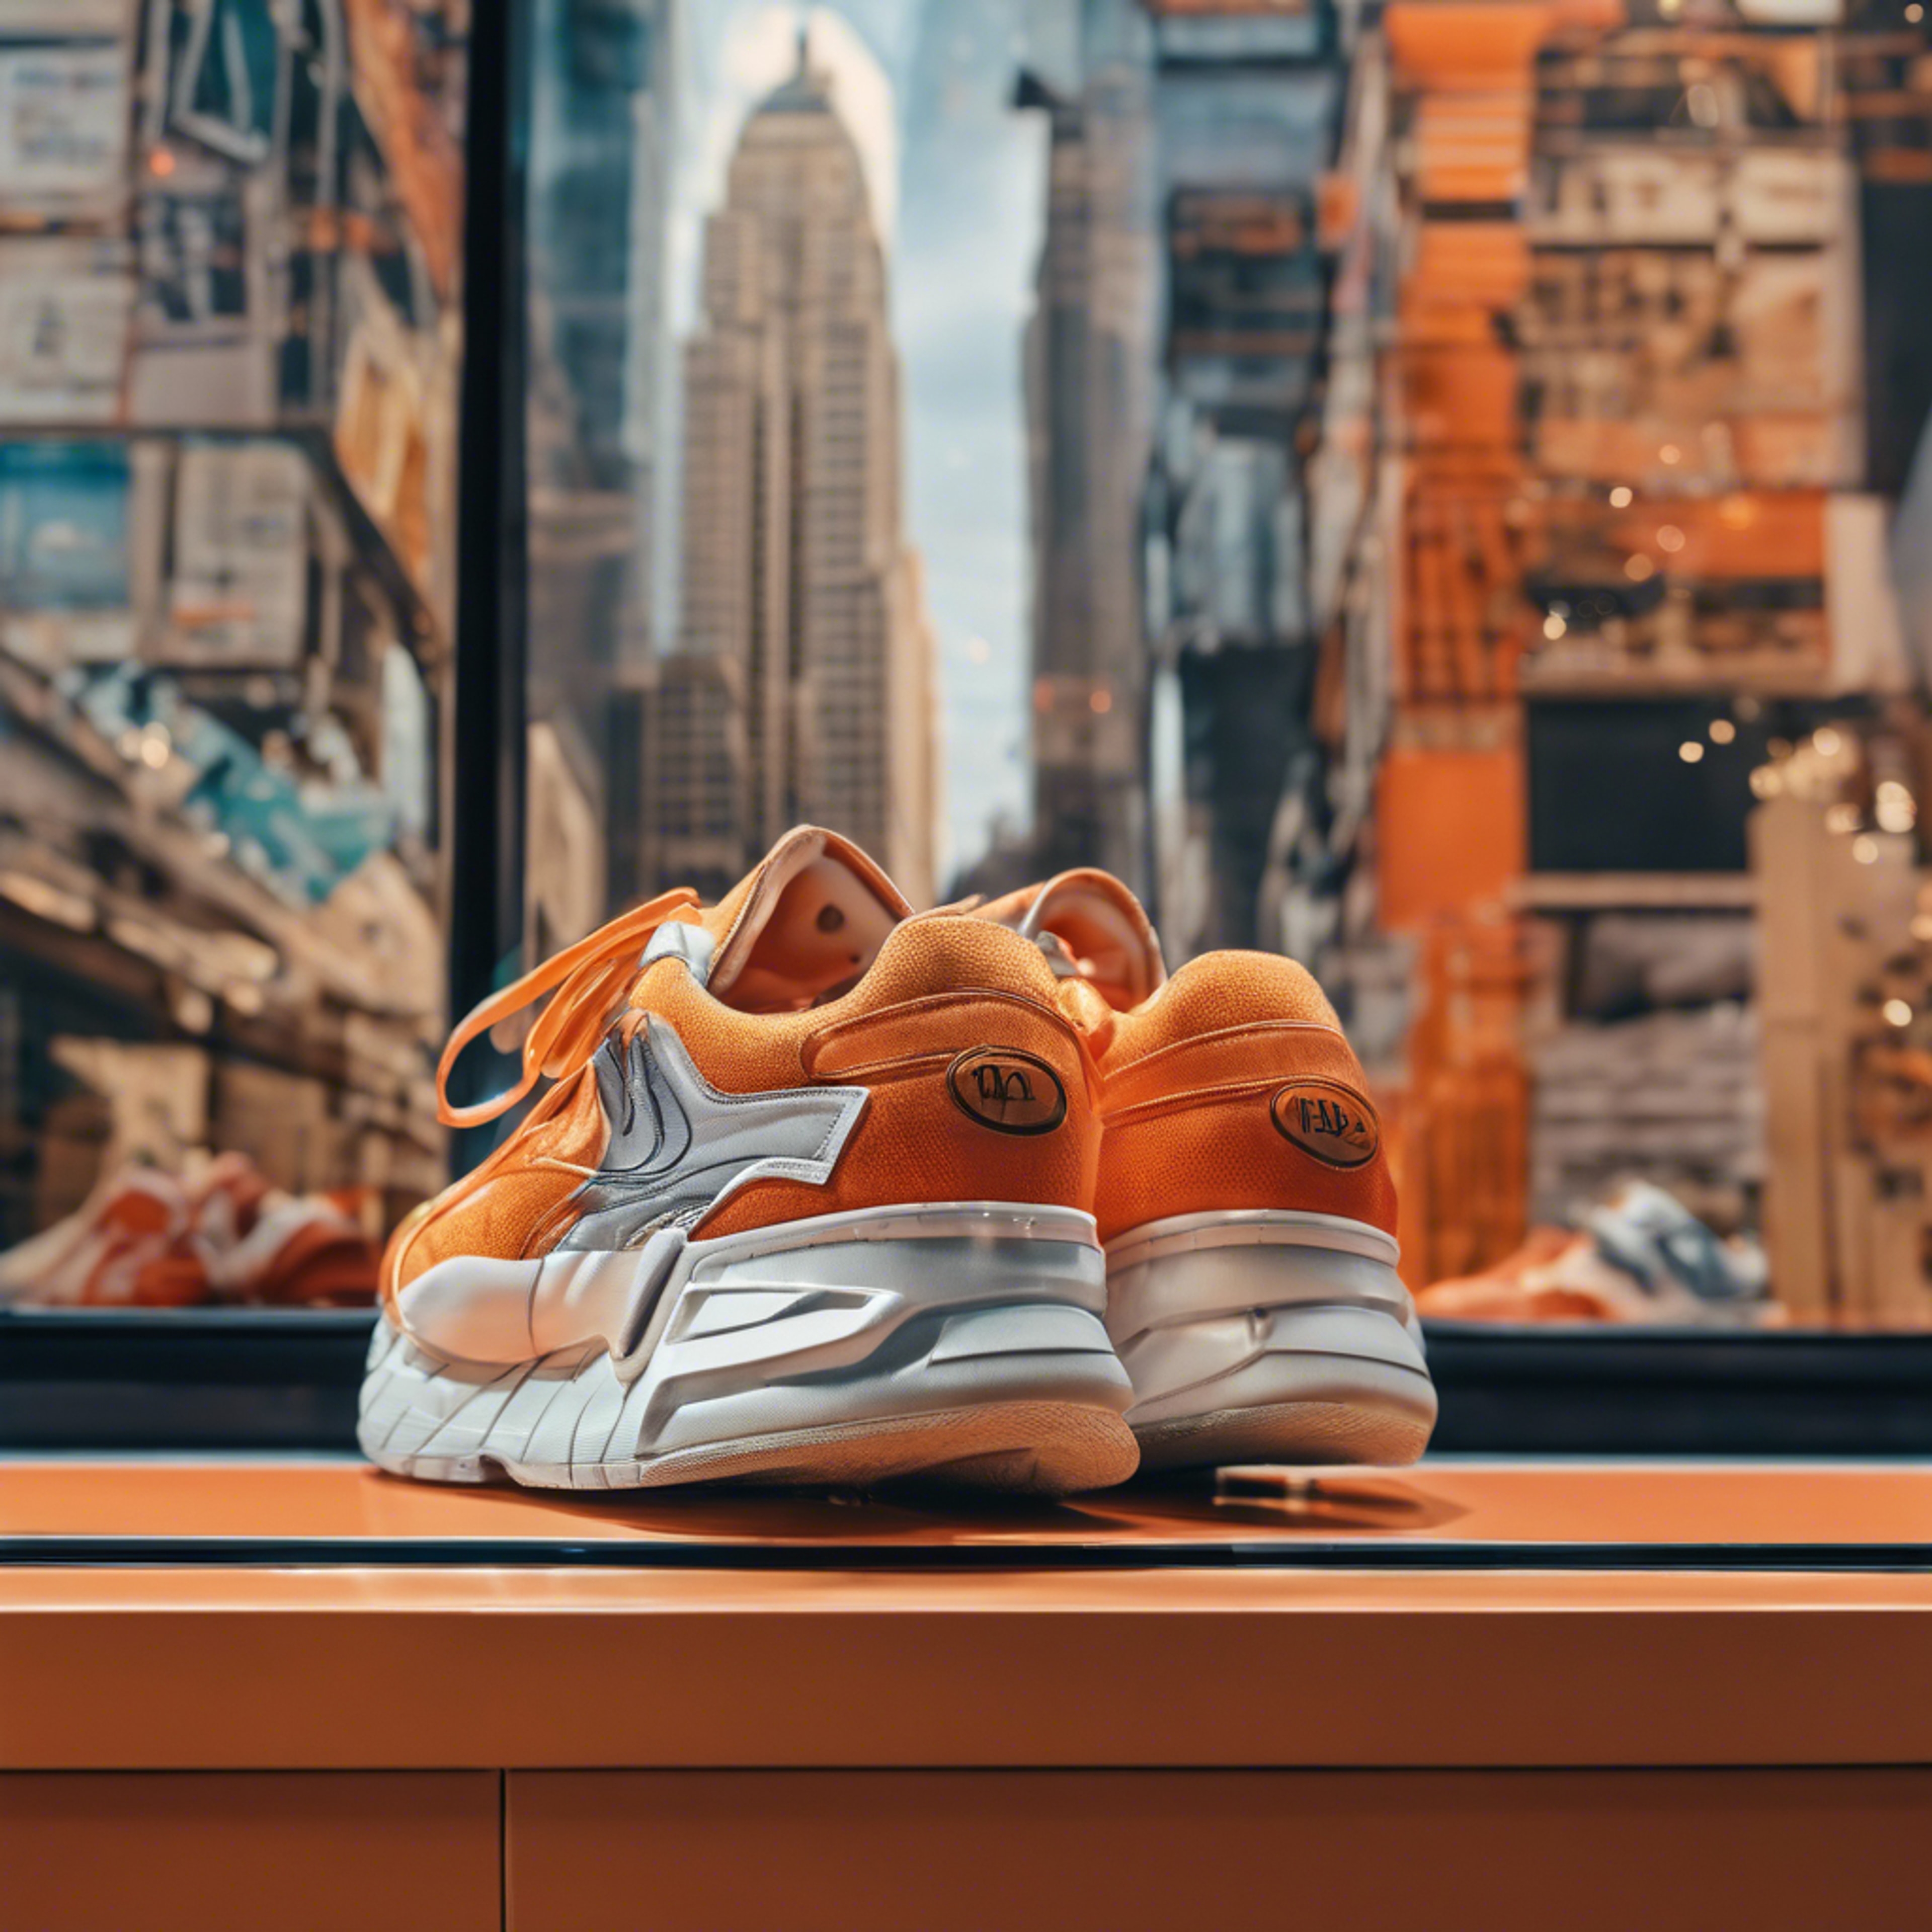 Orange Y2K-inspired sneakers displayed in a shoe store window with a retro cityscape backdrop. duvar kağıdı[c42ef01953ac4184b365]